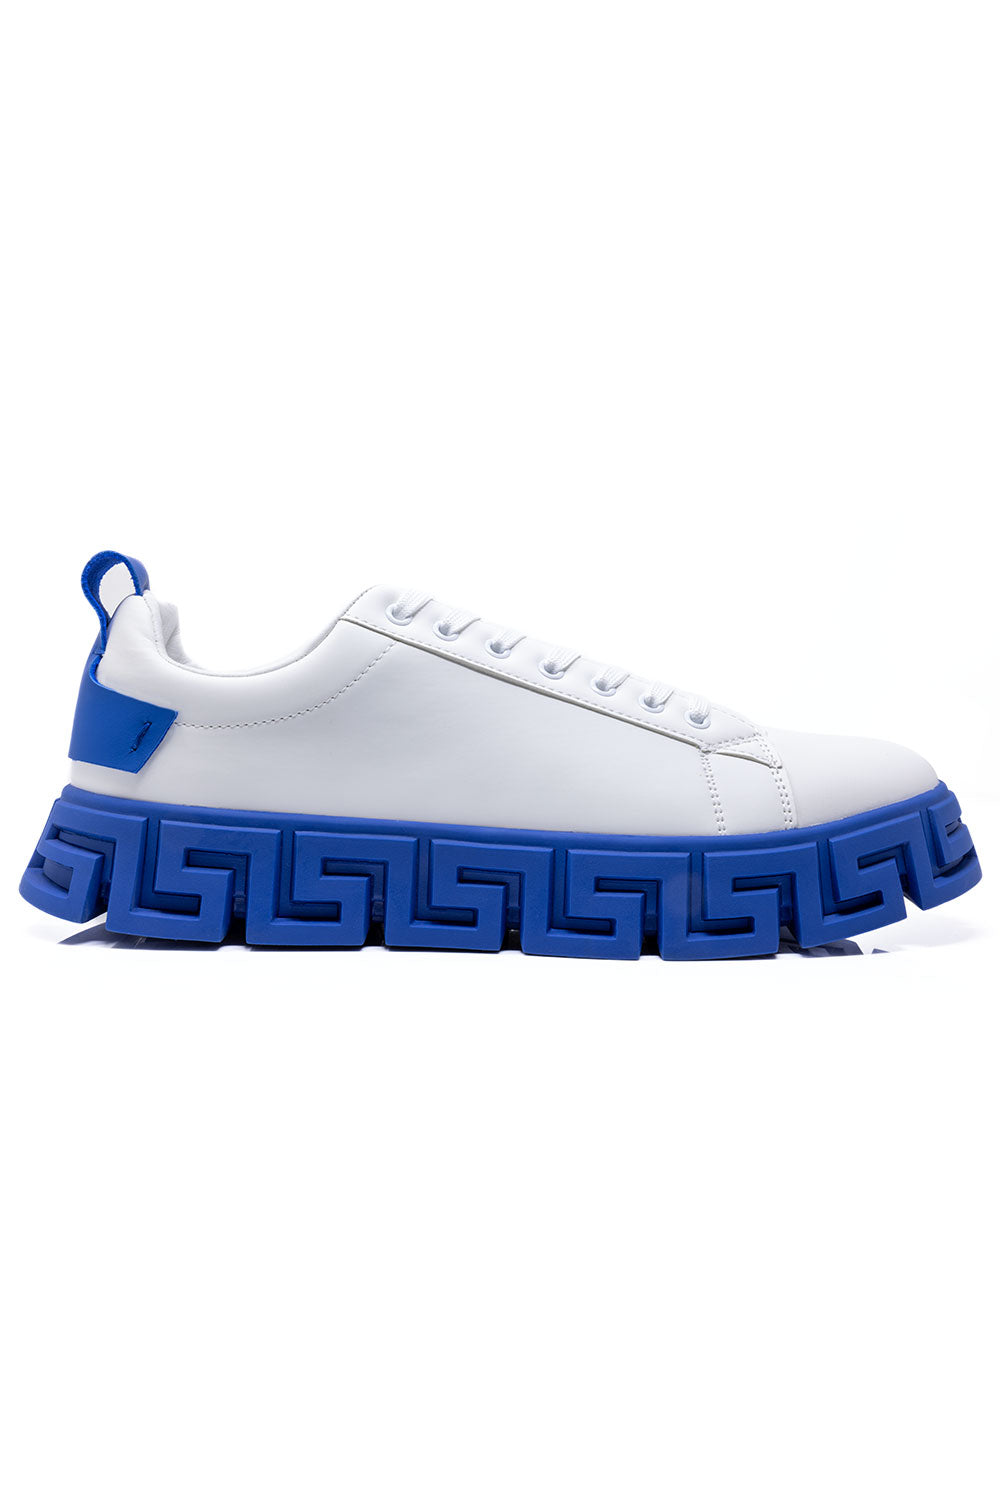 Barabas Men's Greek Key Sole Pattern Premium Sneakers 4SK06 White Navy